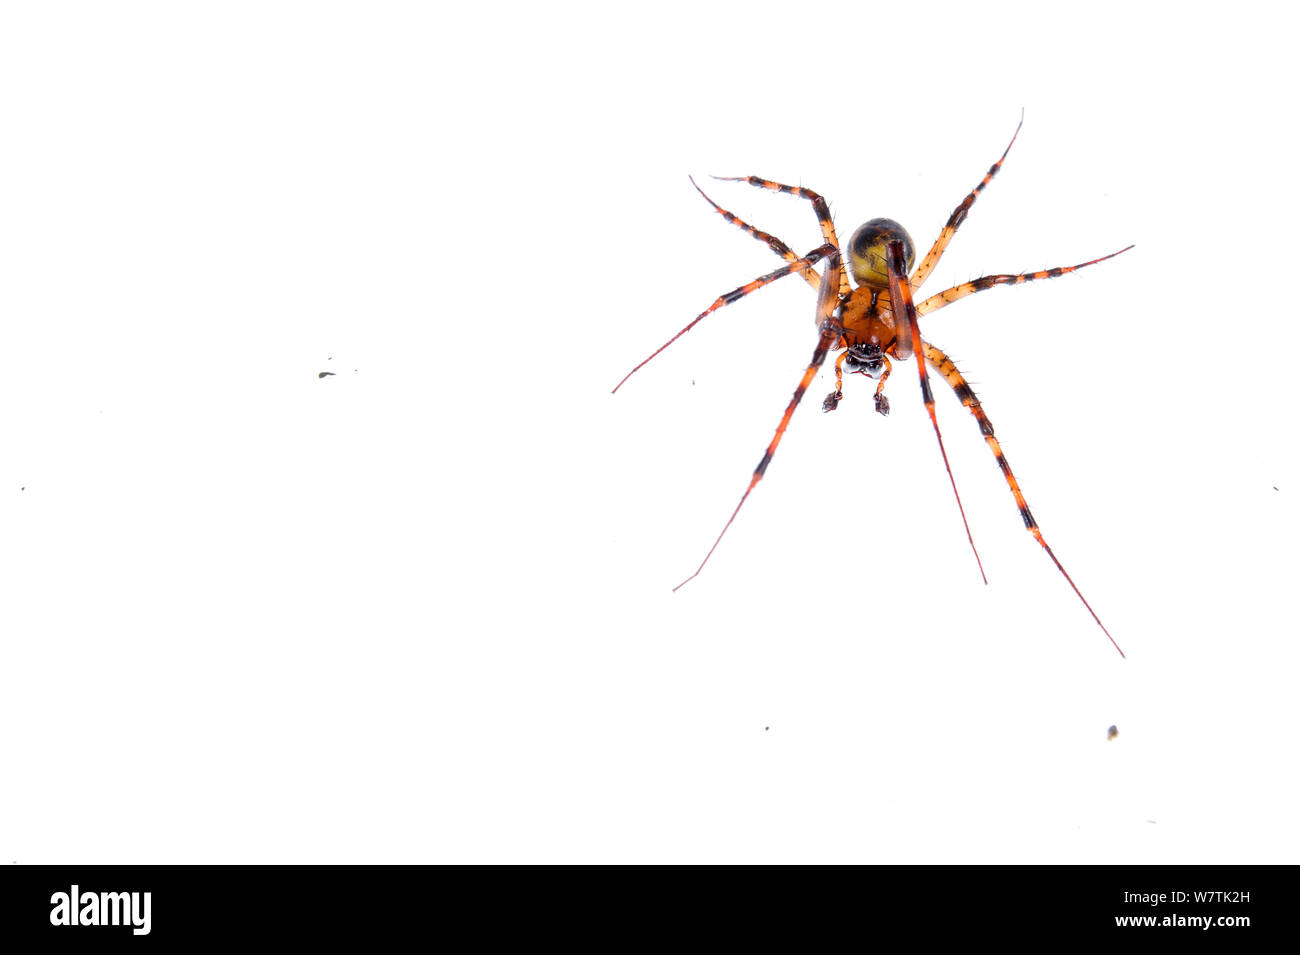 Cave spider (Meta menardi) adult male, Busalla, Italy, February. Meetyourneighbours.net project Stock Photo